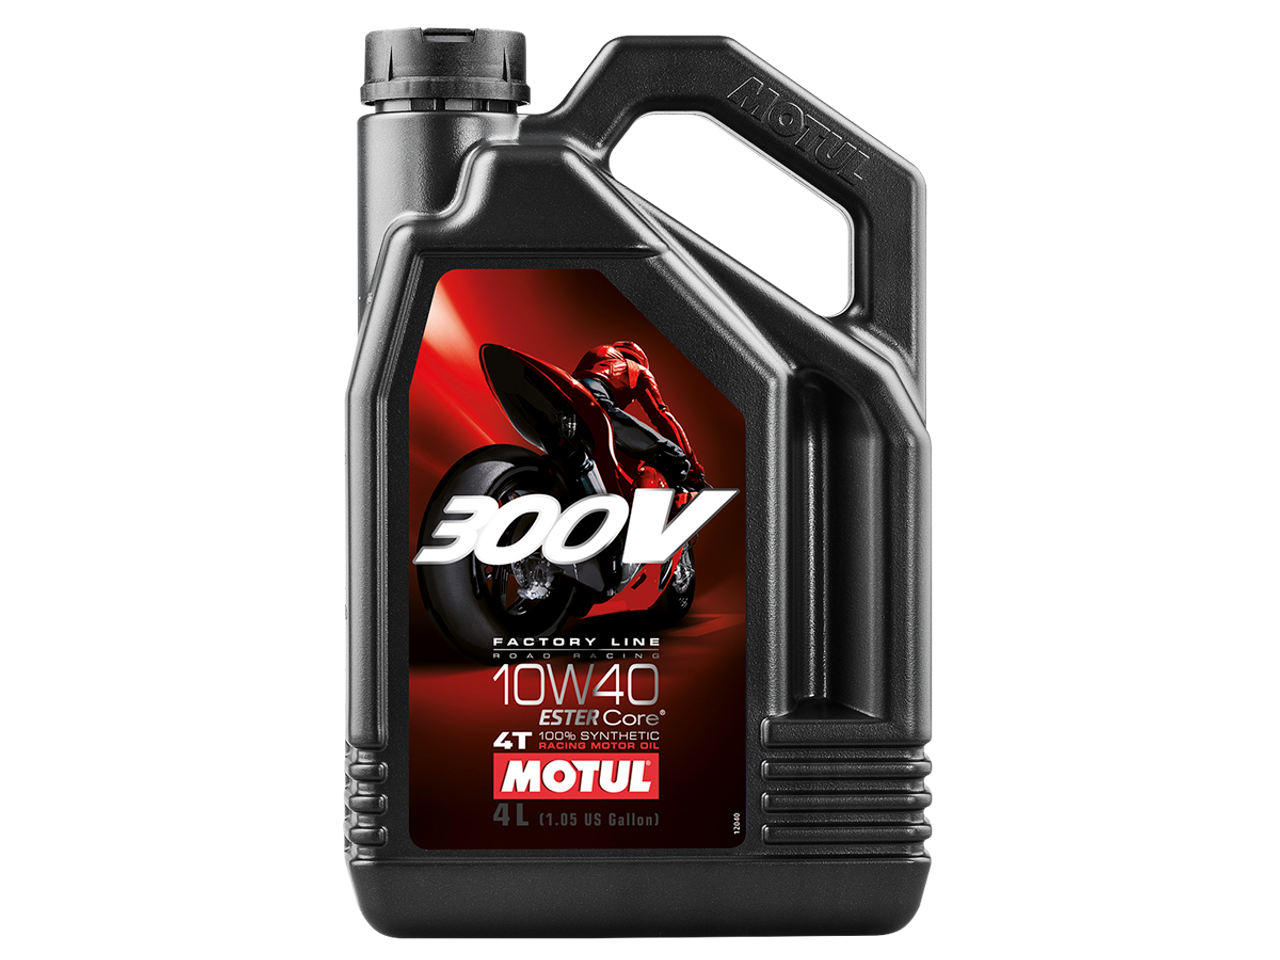 Motul 300V Racing Full Synthetic Motorcycle Oil 10W40 (4lt): MOTO-D Racing